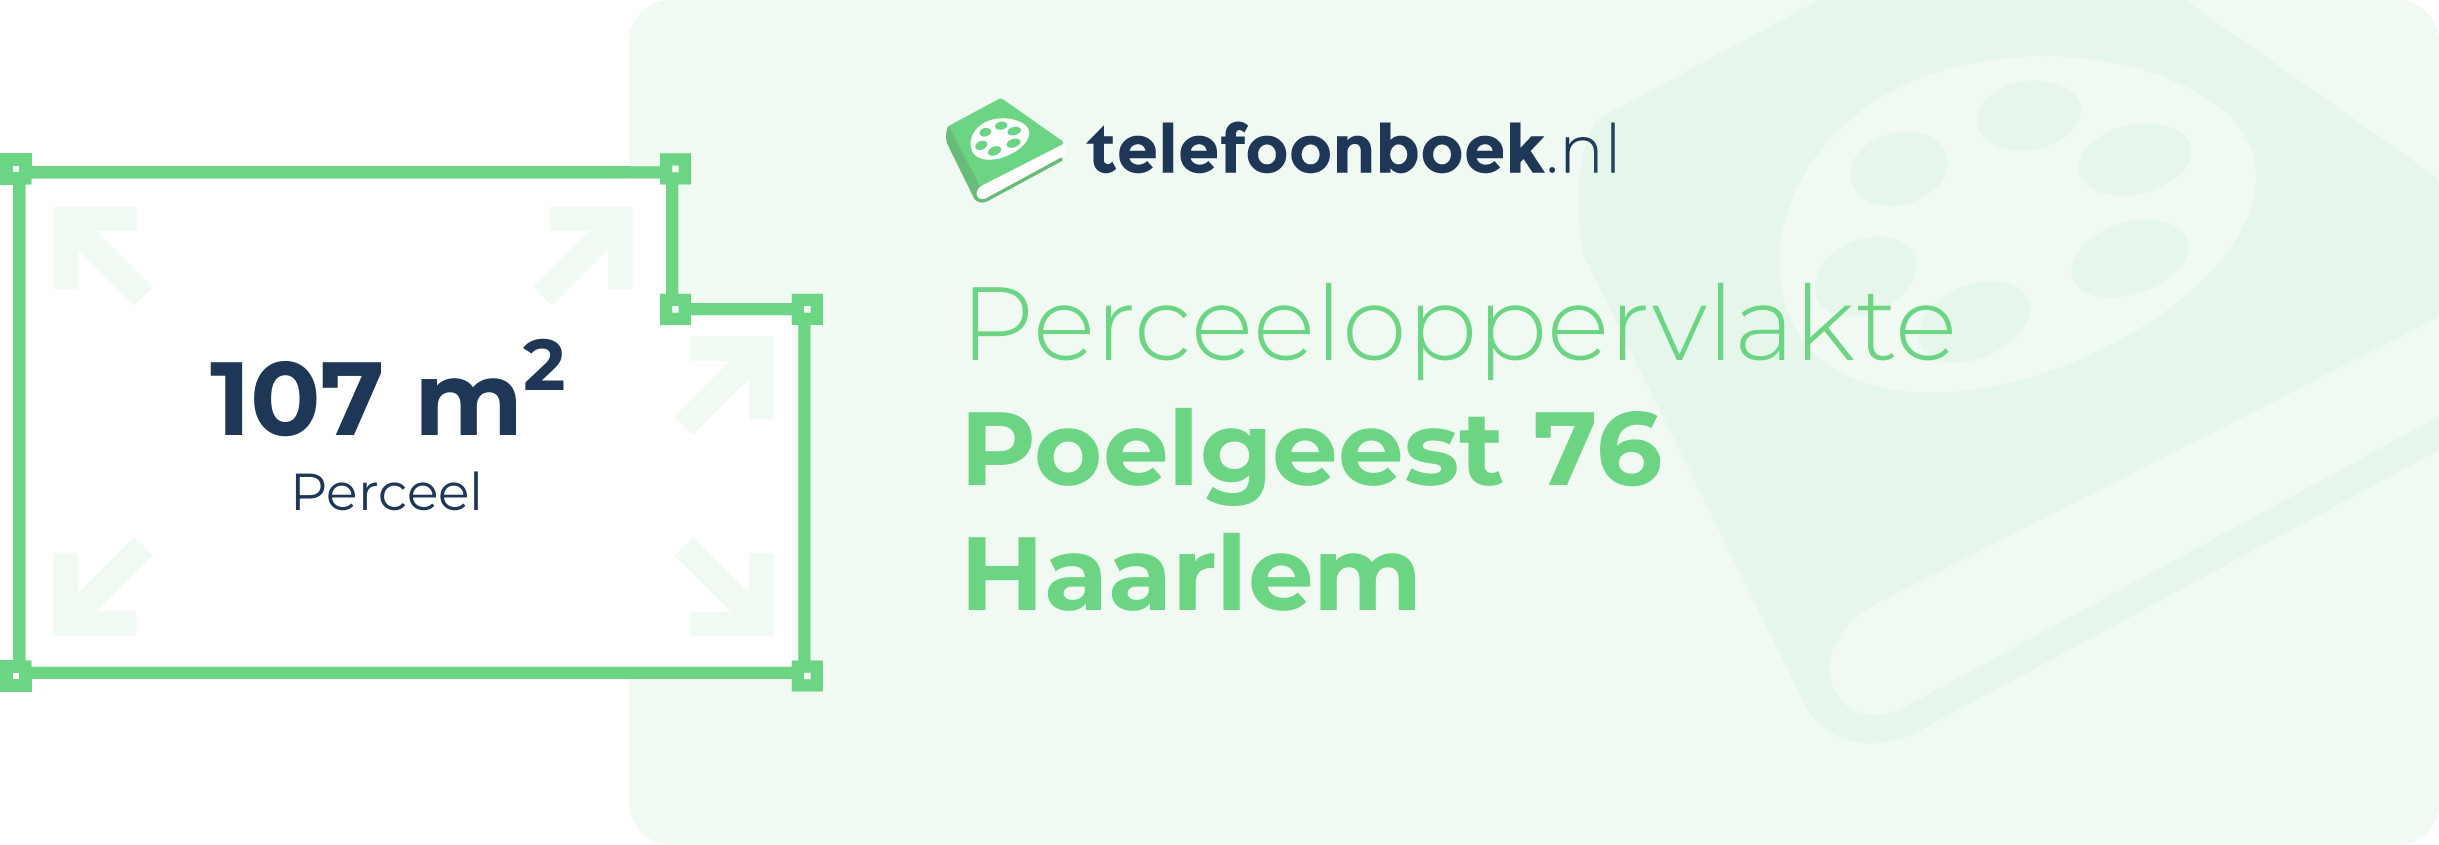 Perceeloppervlakte Poelgeest 76 Haarlem